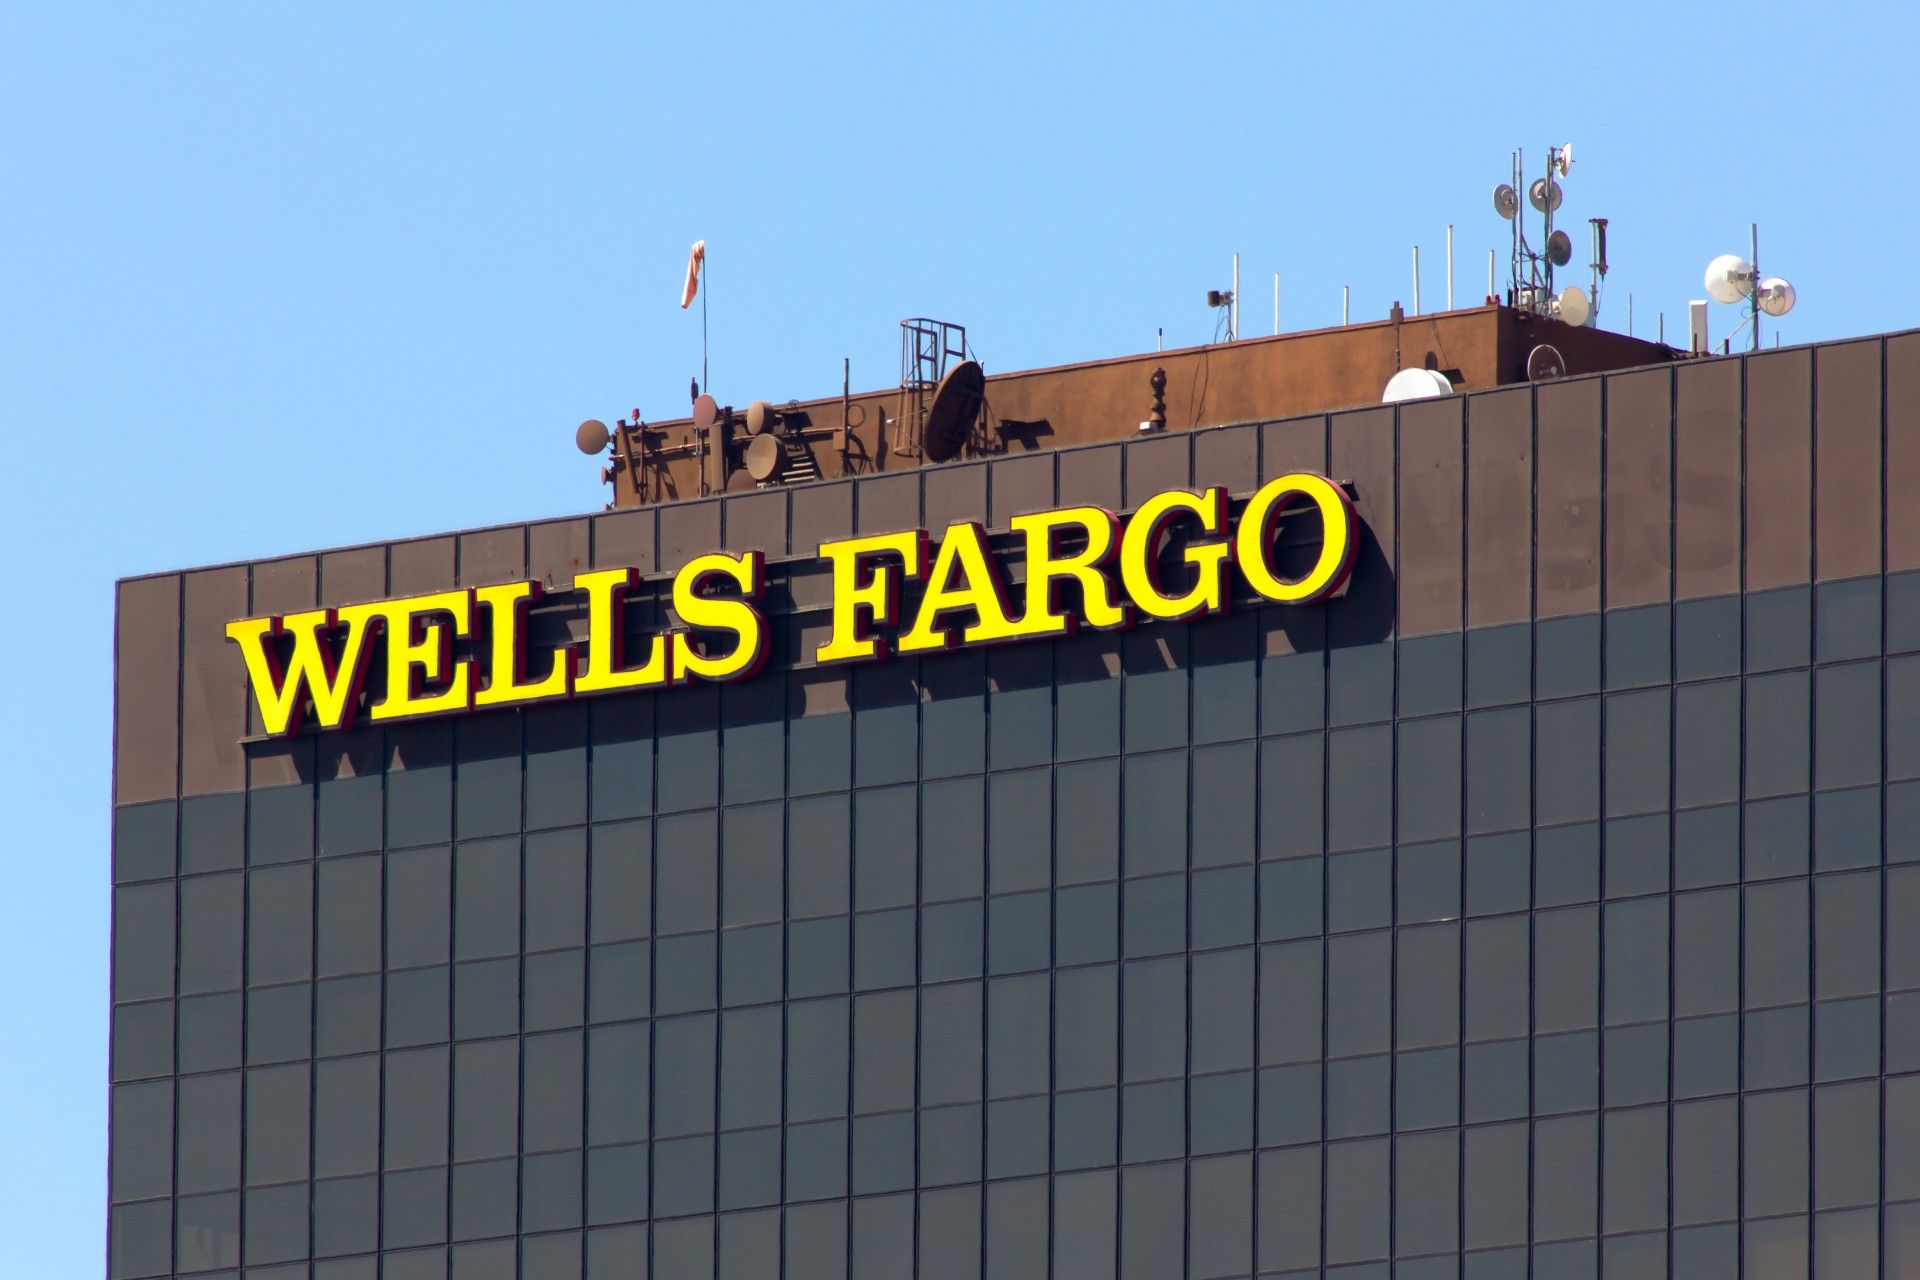 Wells Fargo building - call recordings